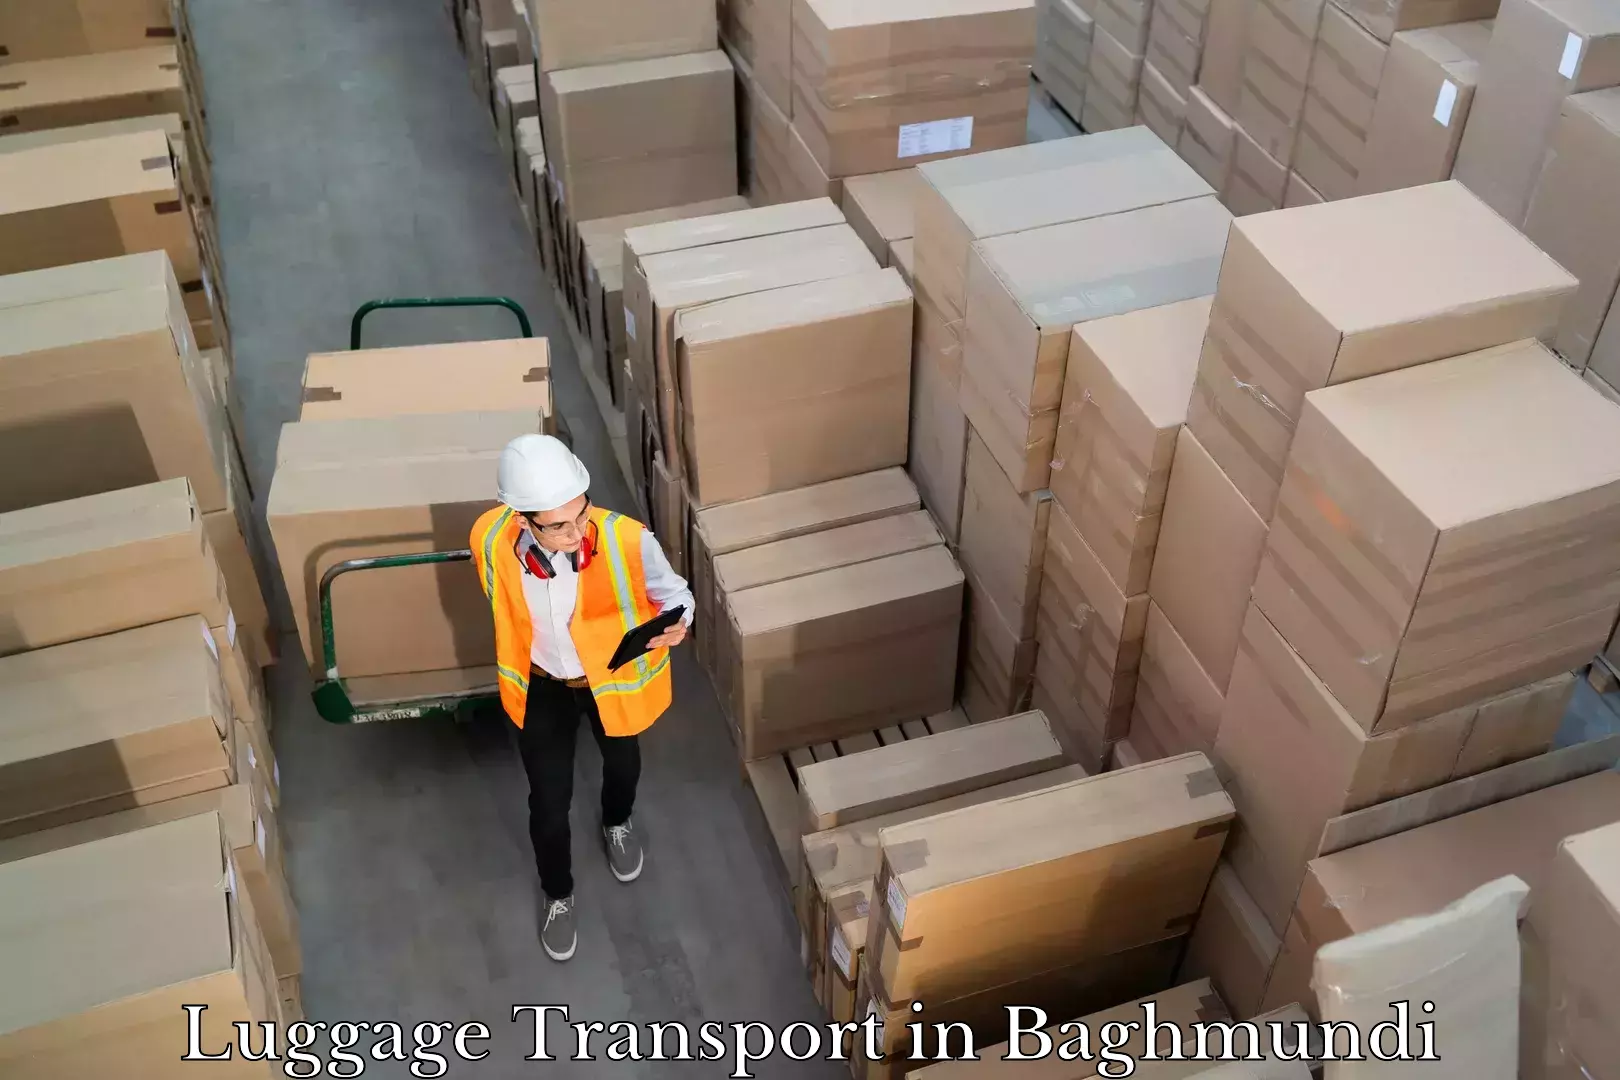 Luggage shipment specialists in Baghmundi